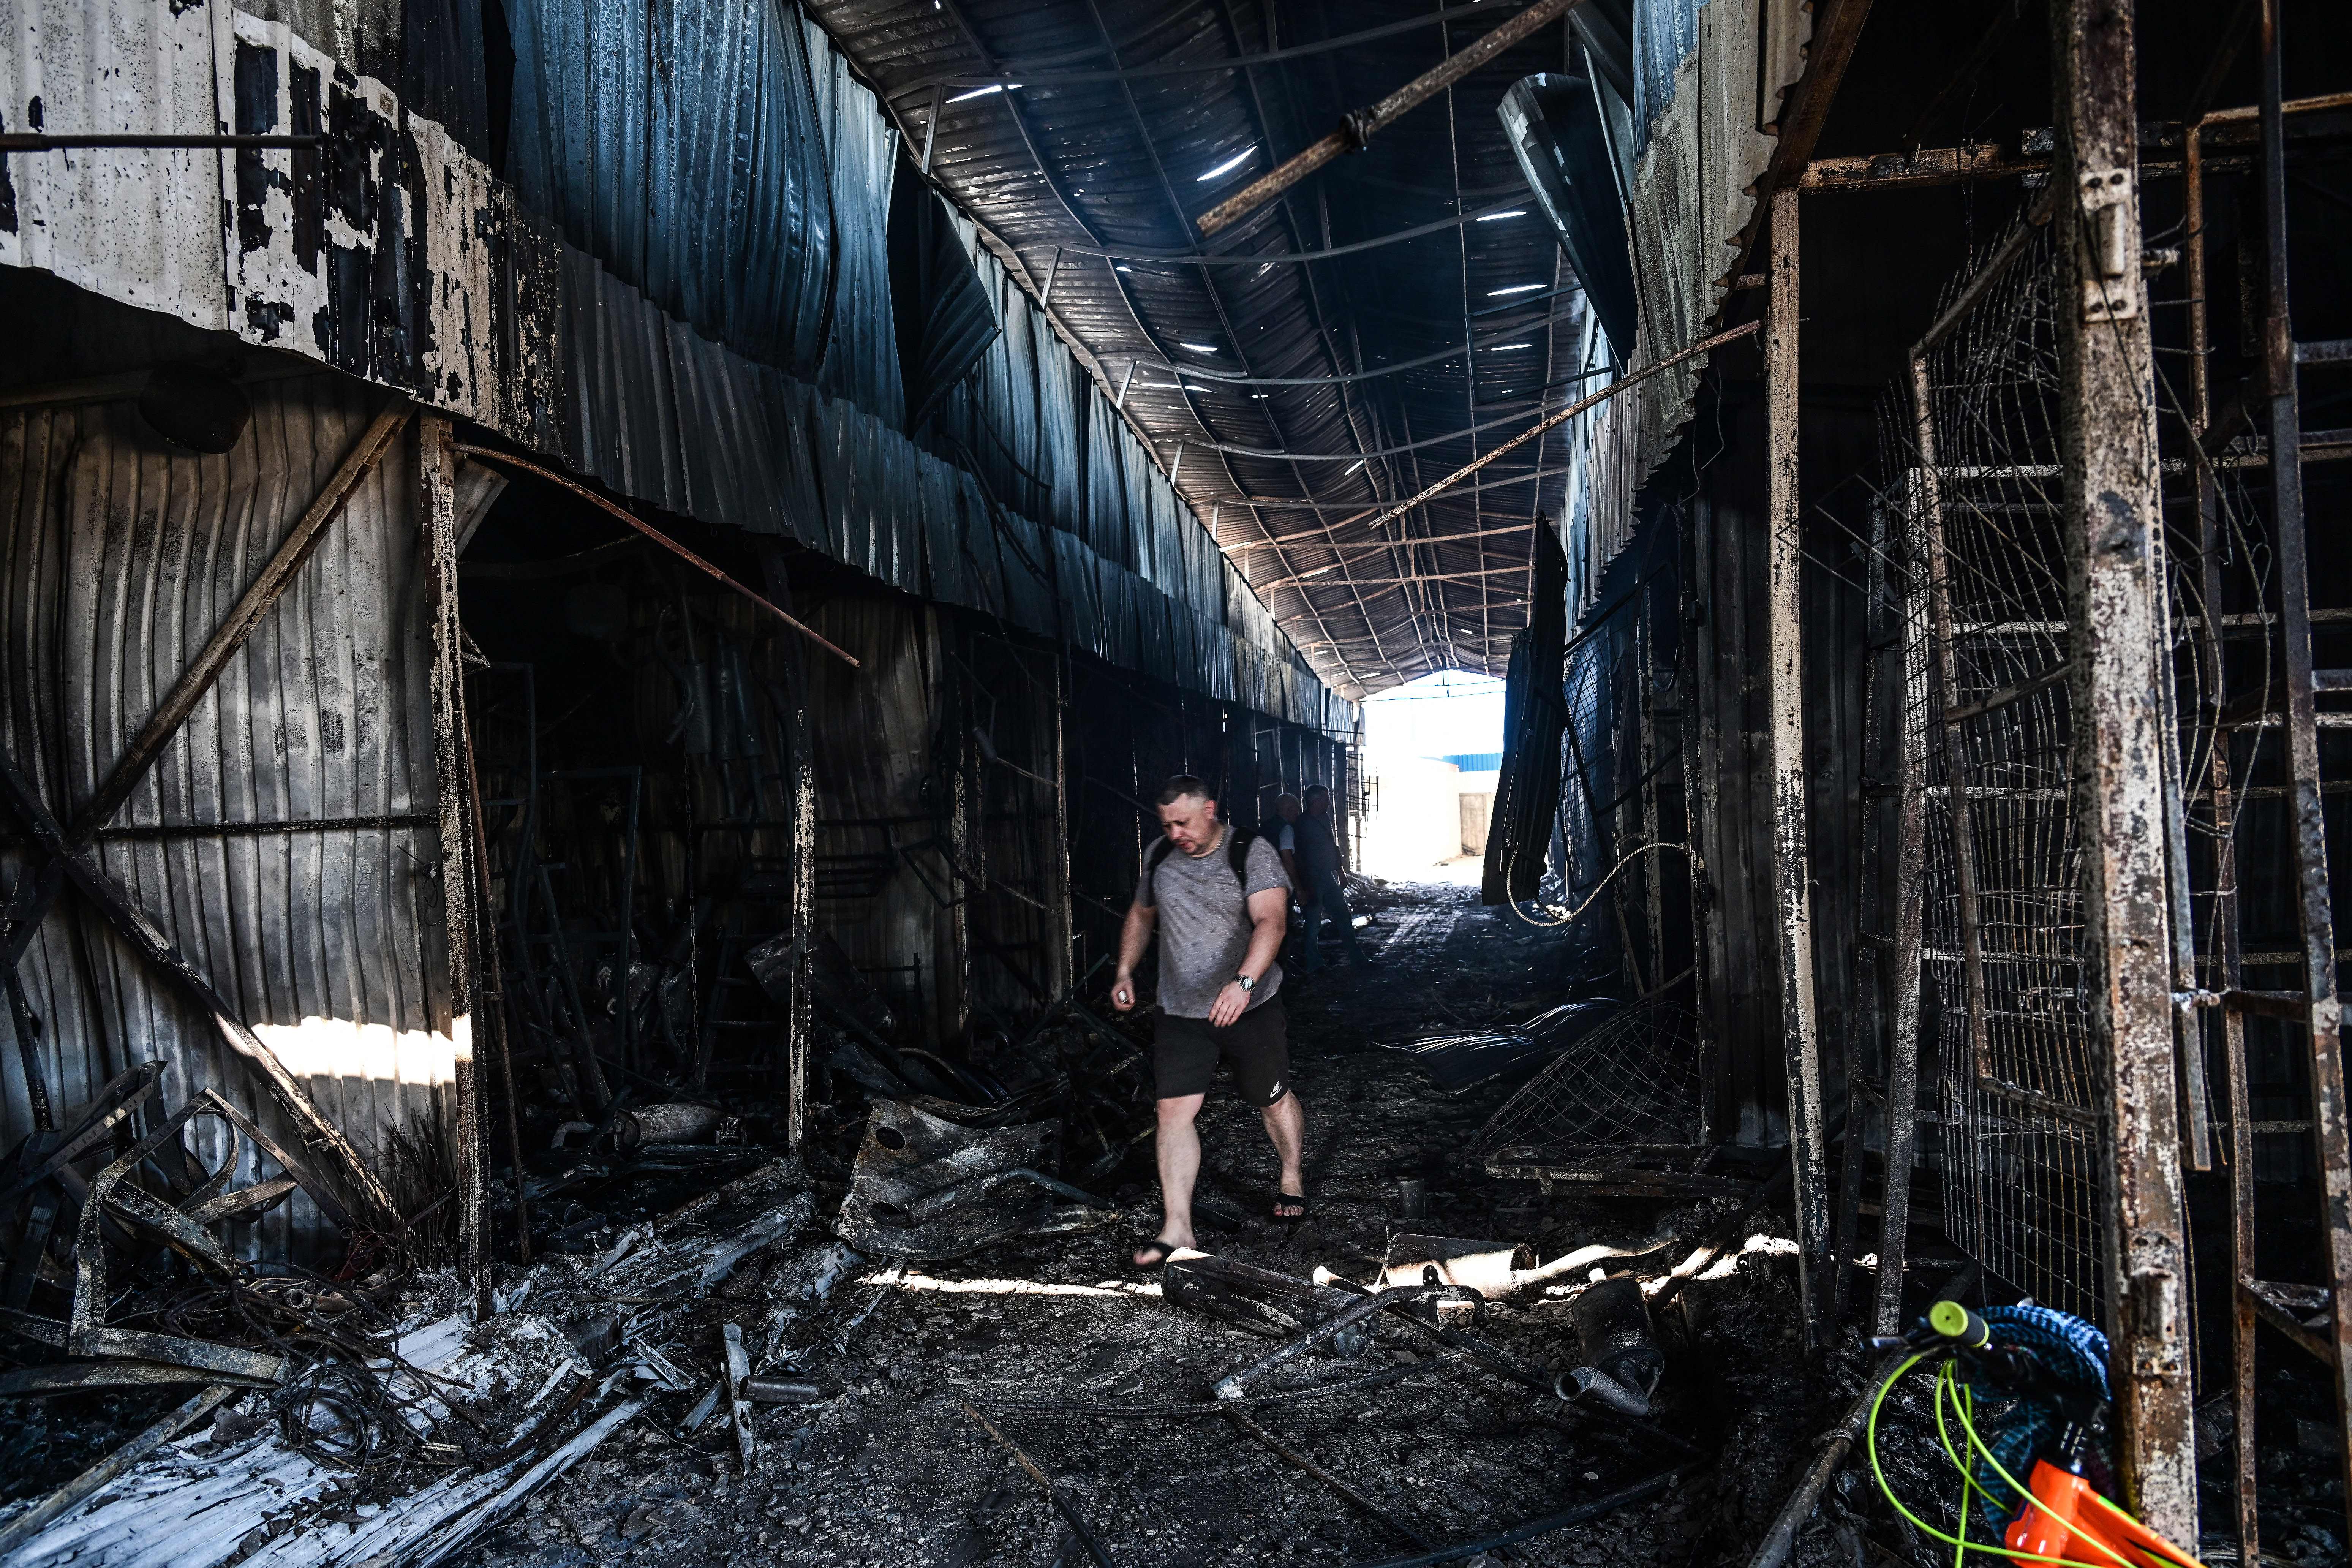 Sloviansk under heavy fire as Russia’s war enters new phase